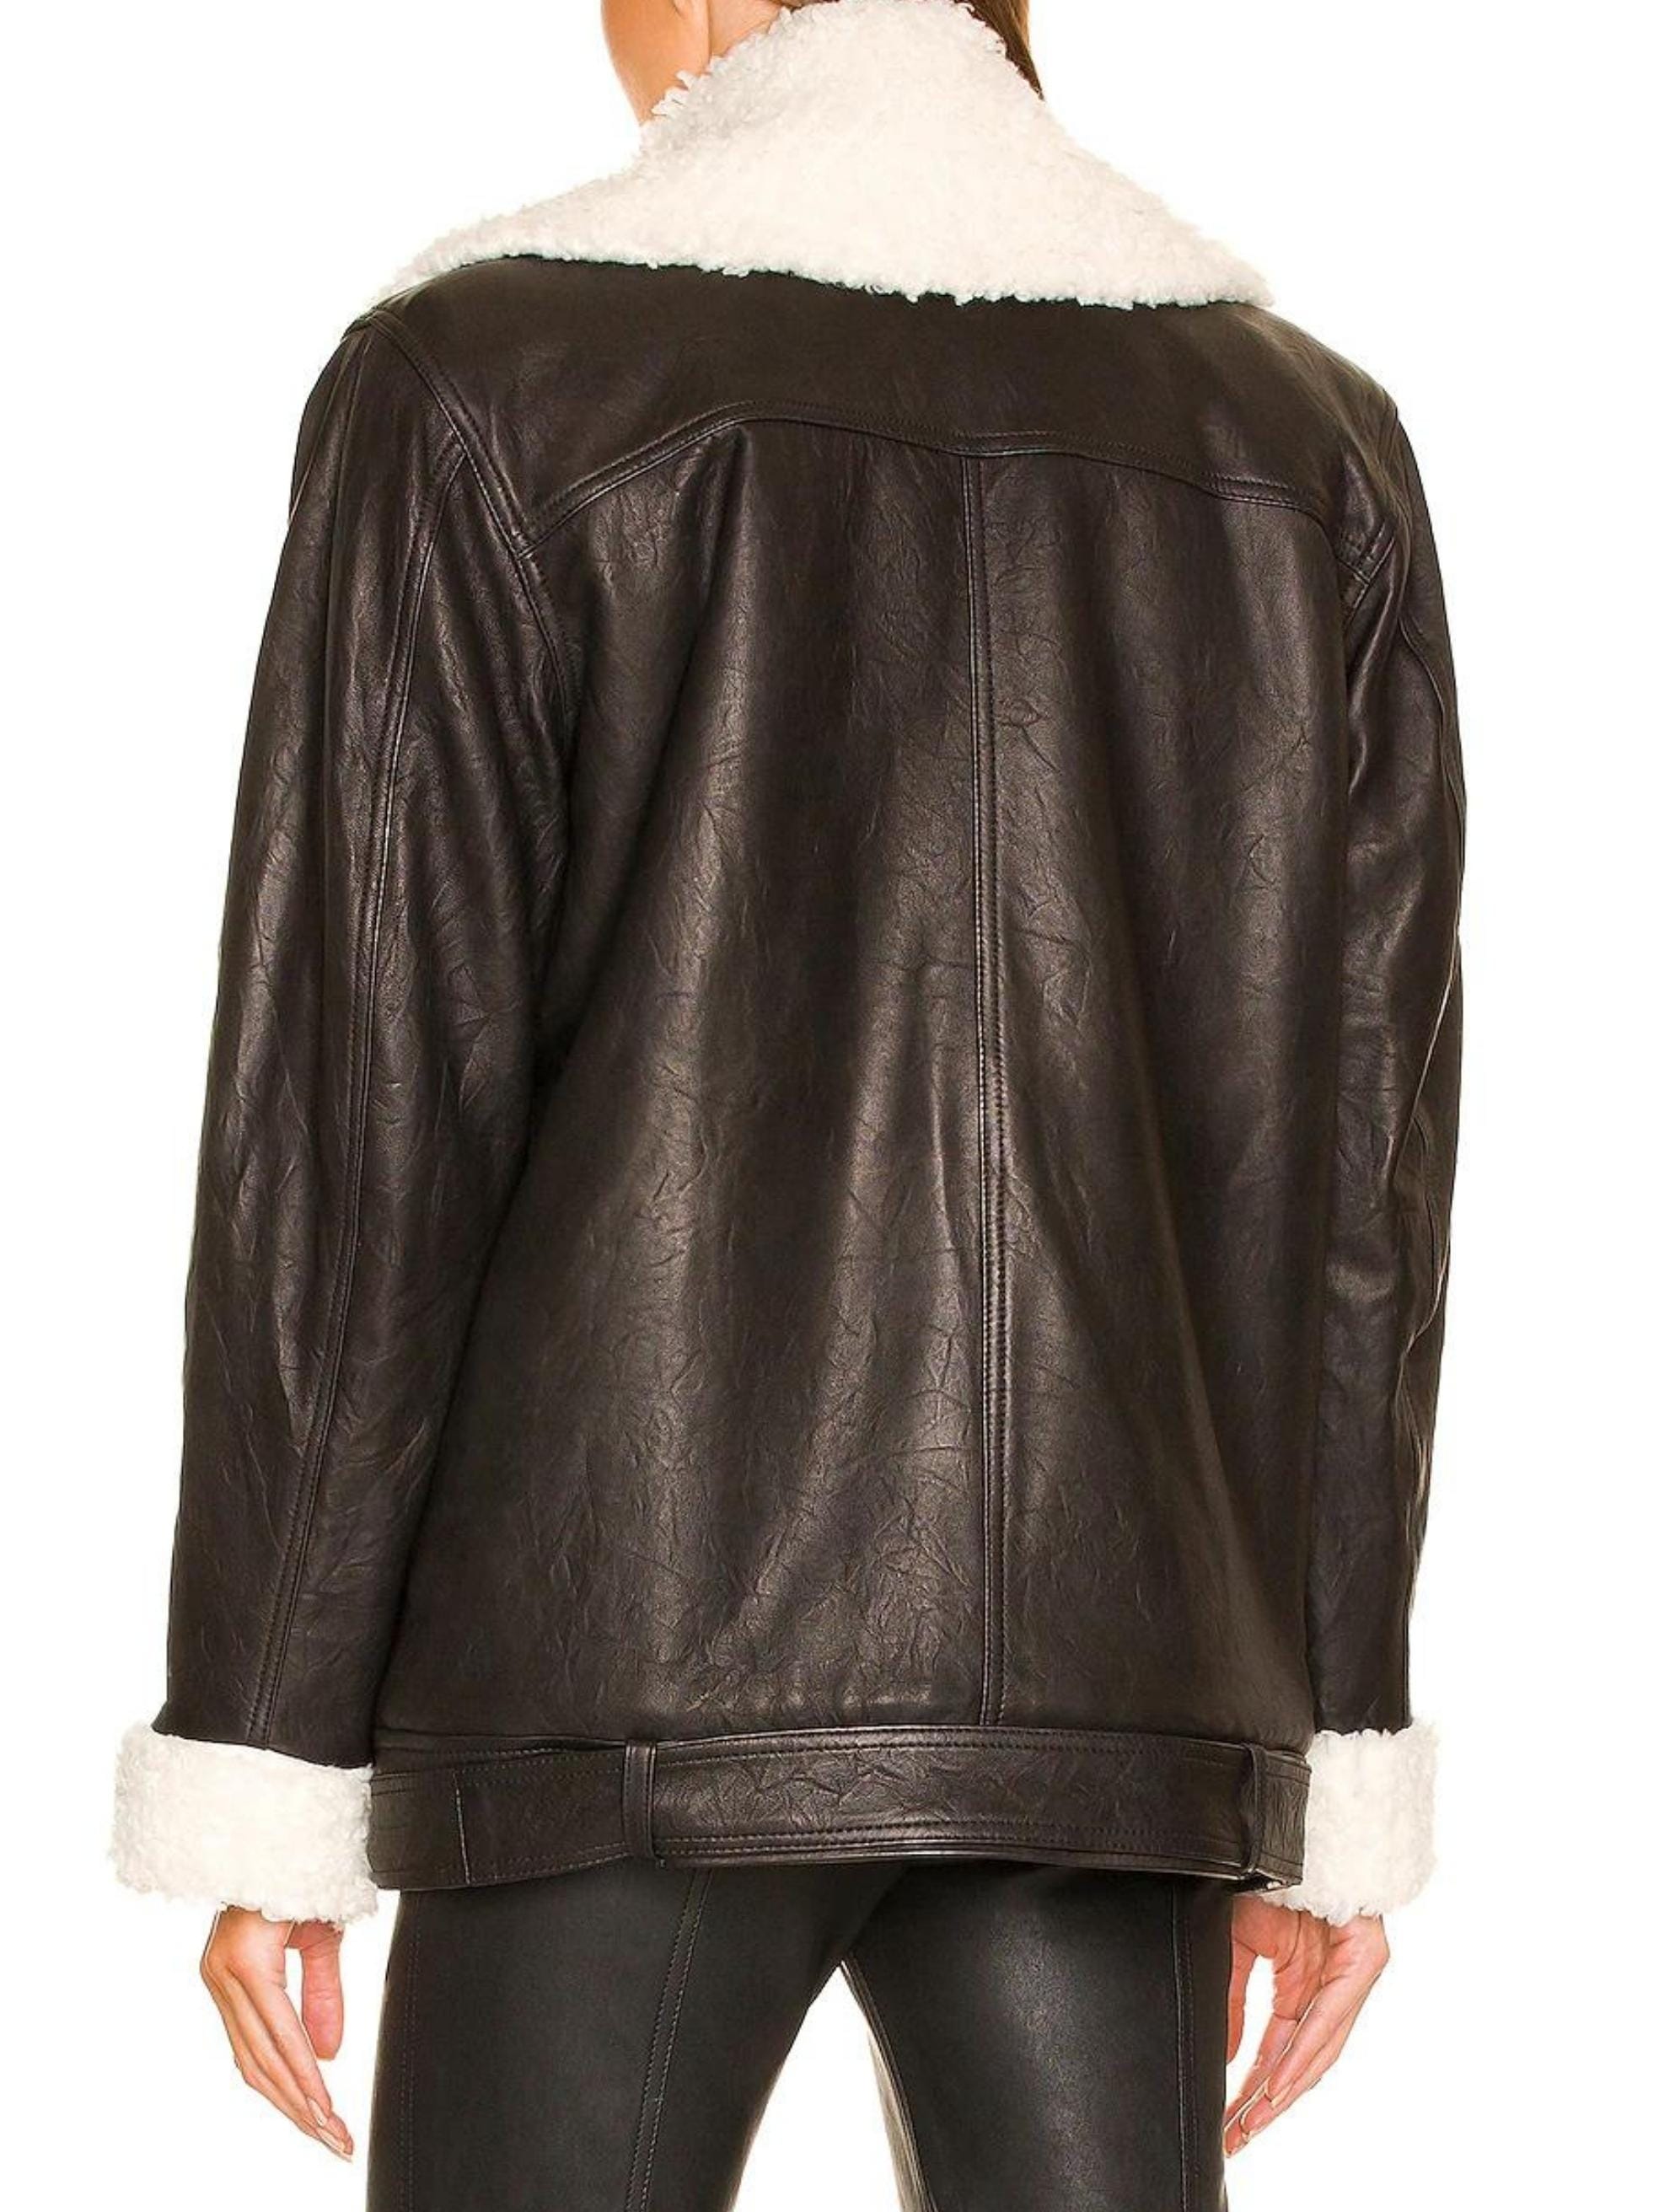 Munroe Shearling Jacket in Black